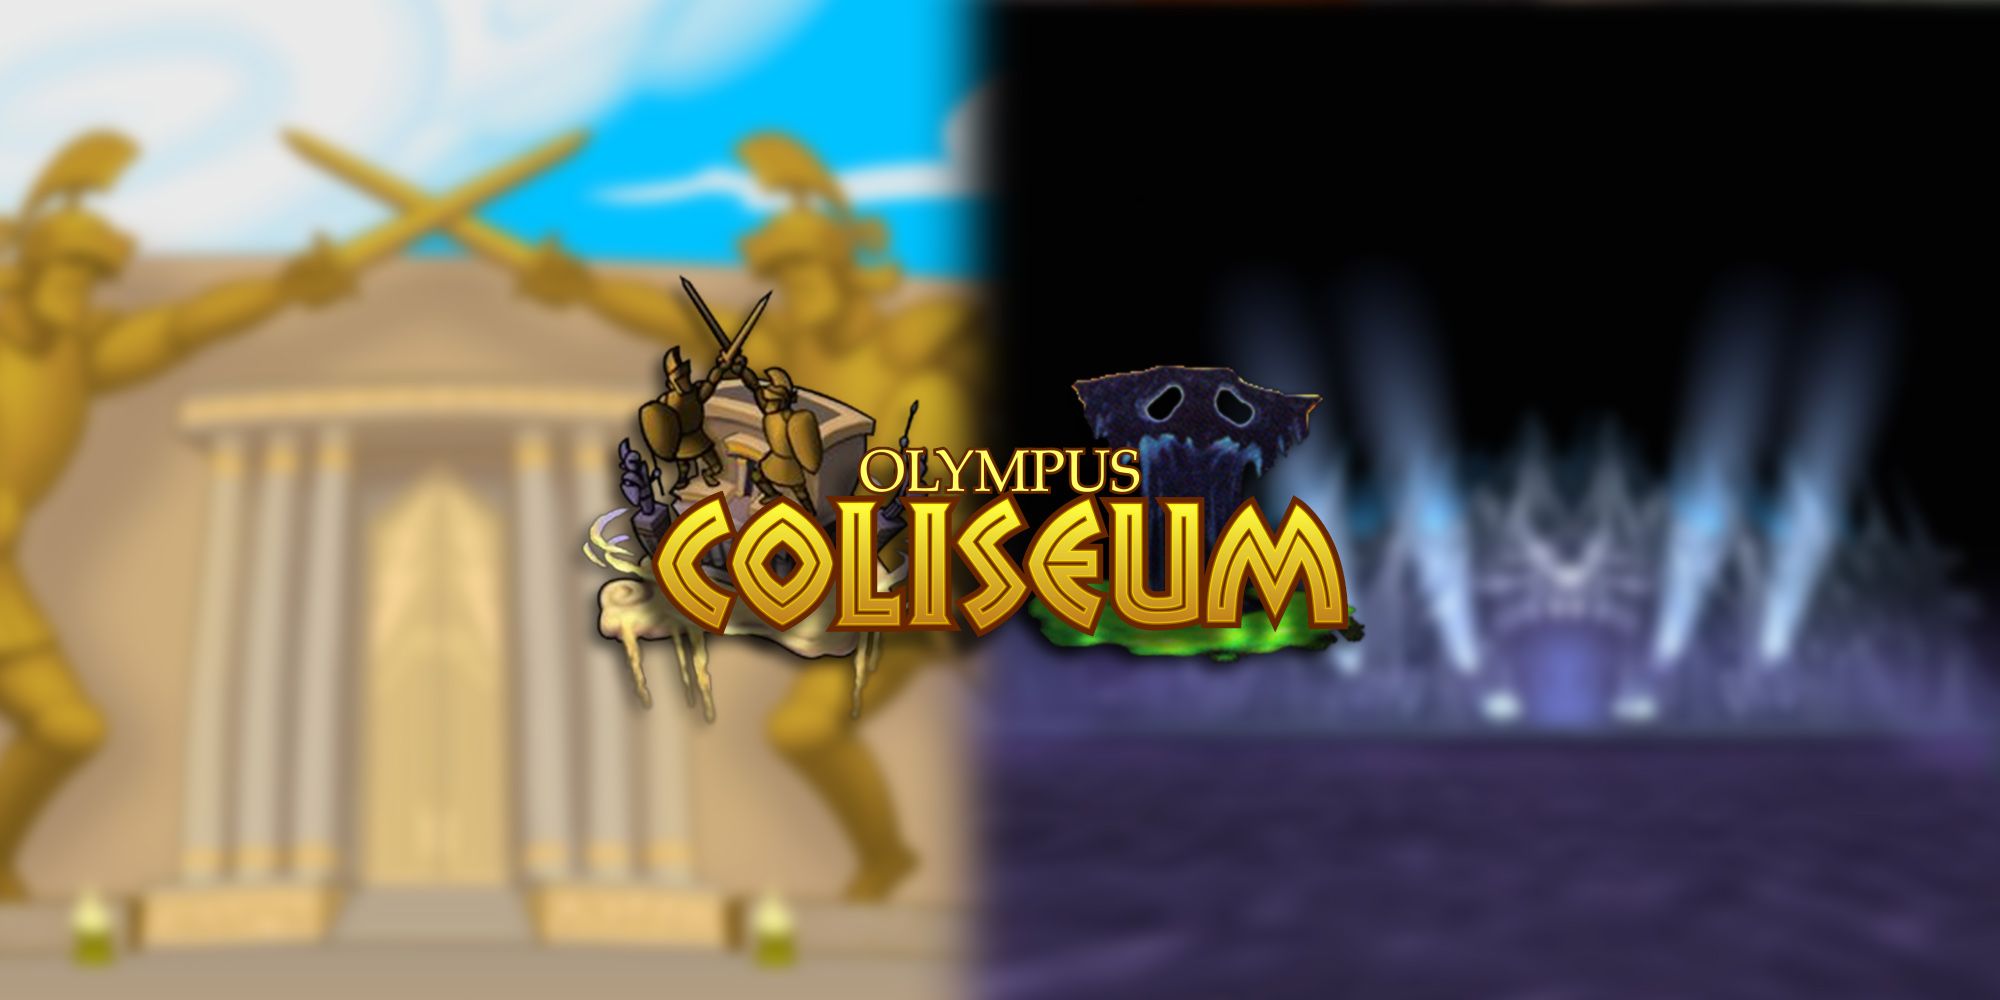 Olympus Coliseum in Kingdom Hearts 2